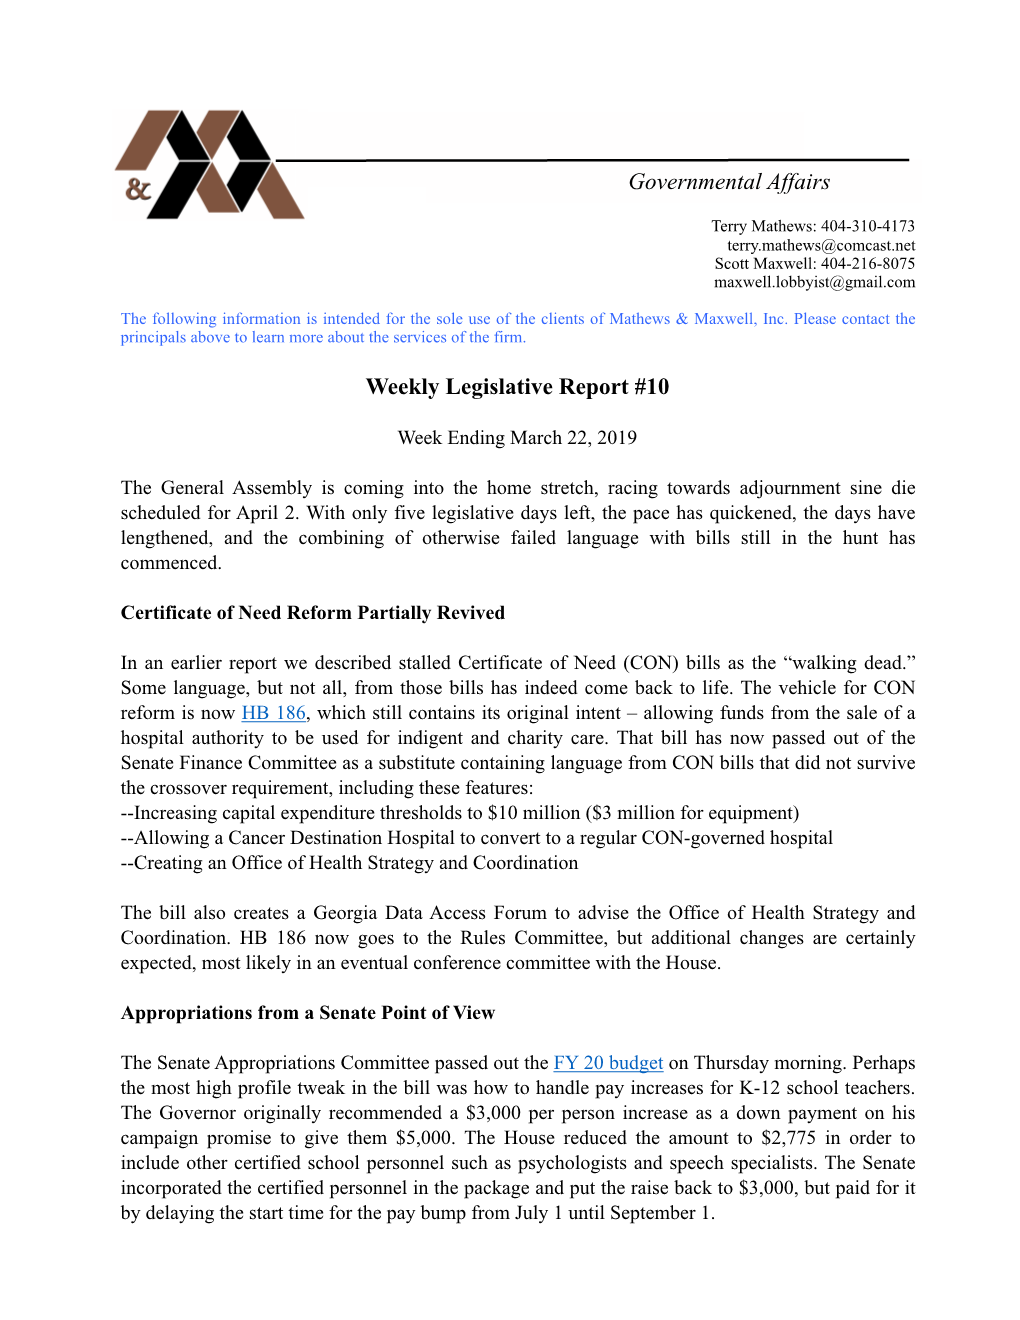 Weekly Legislative Report #10 03-22-19